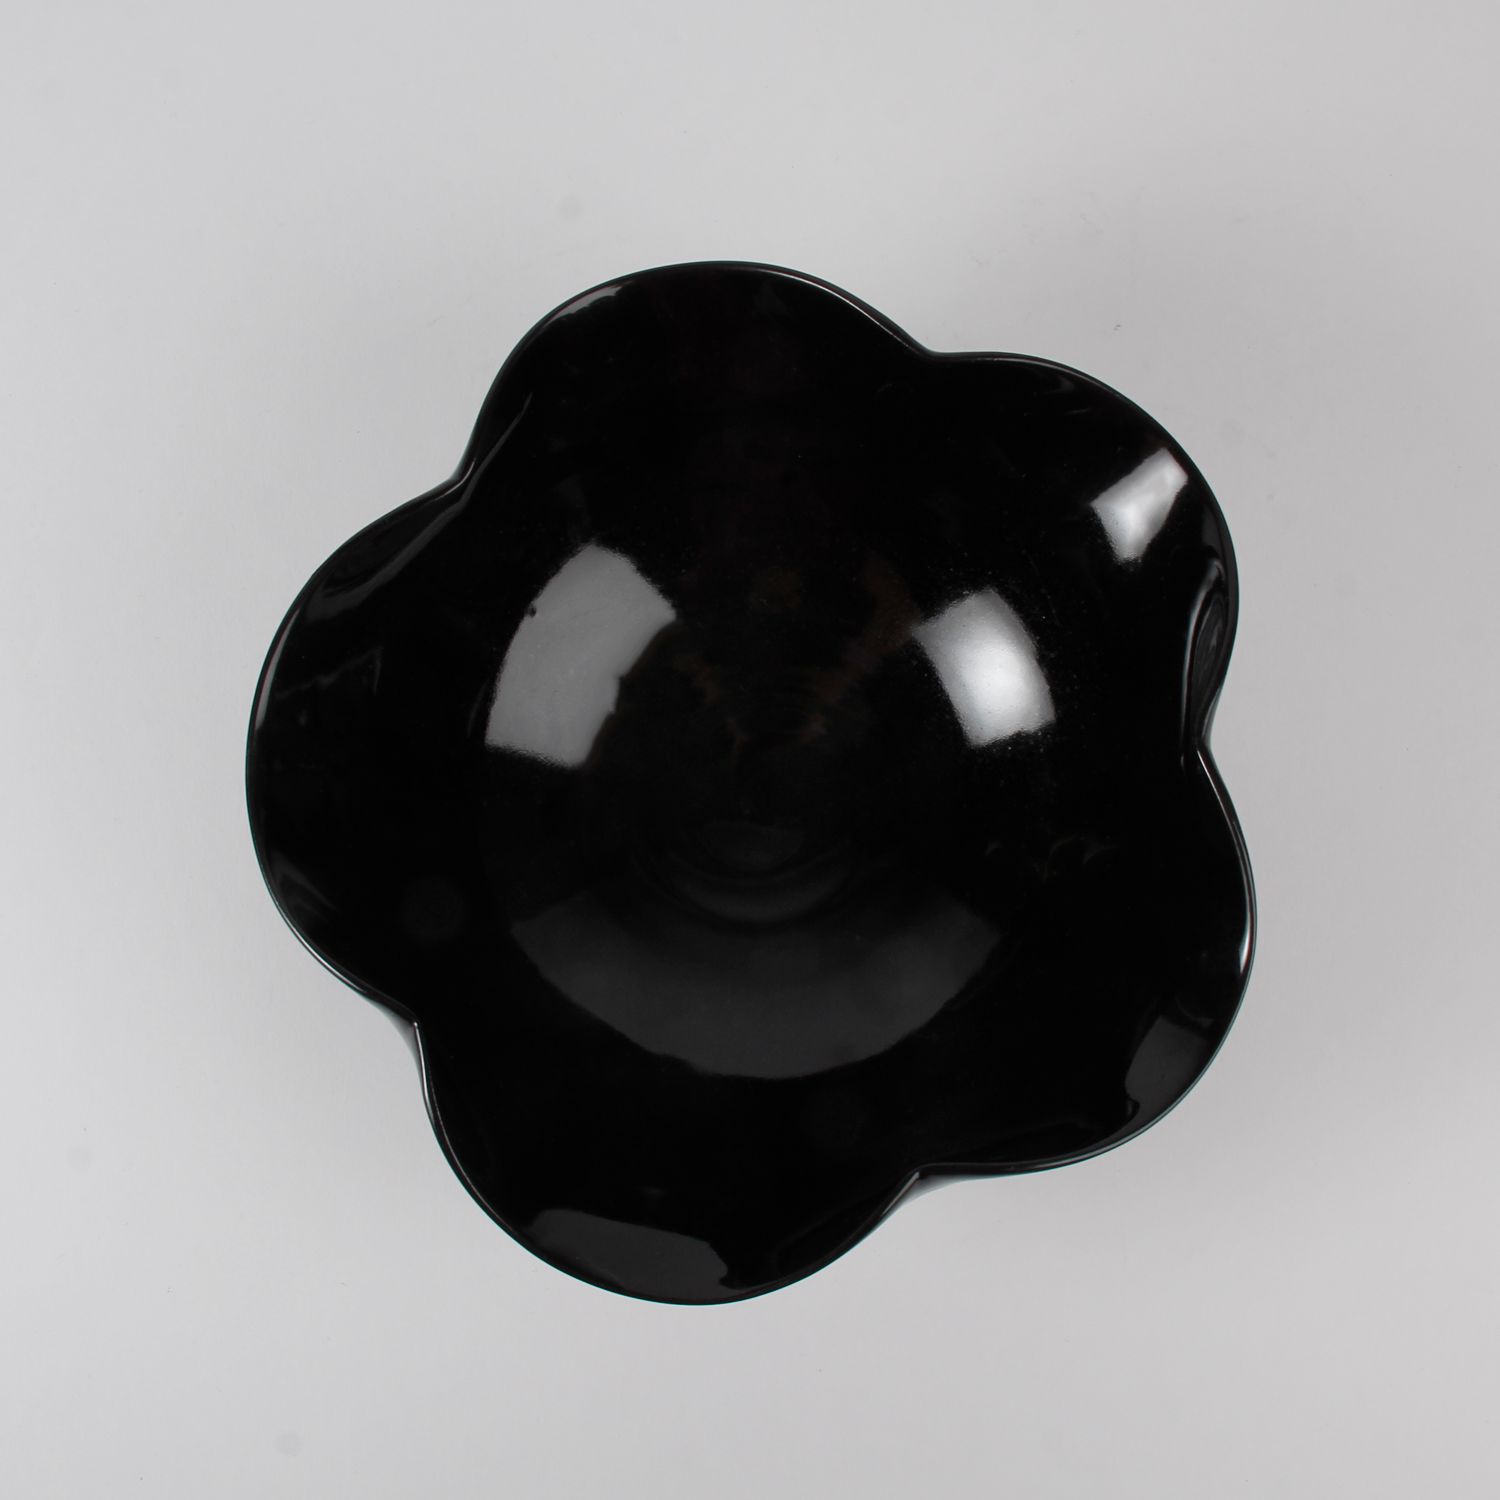 Natalie Waddell: Medium Black Footed Bowl Product Image 3 of 5